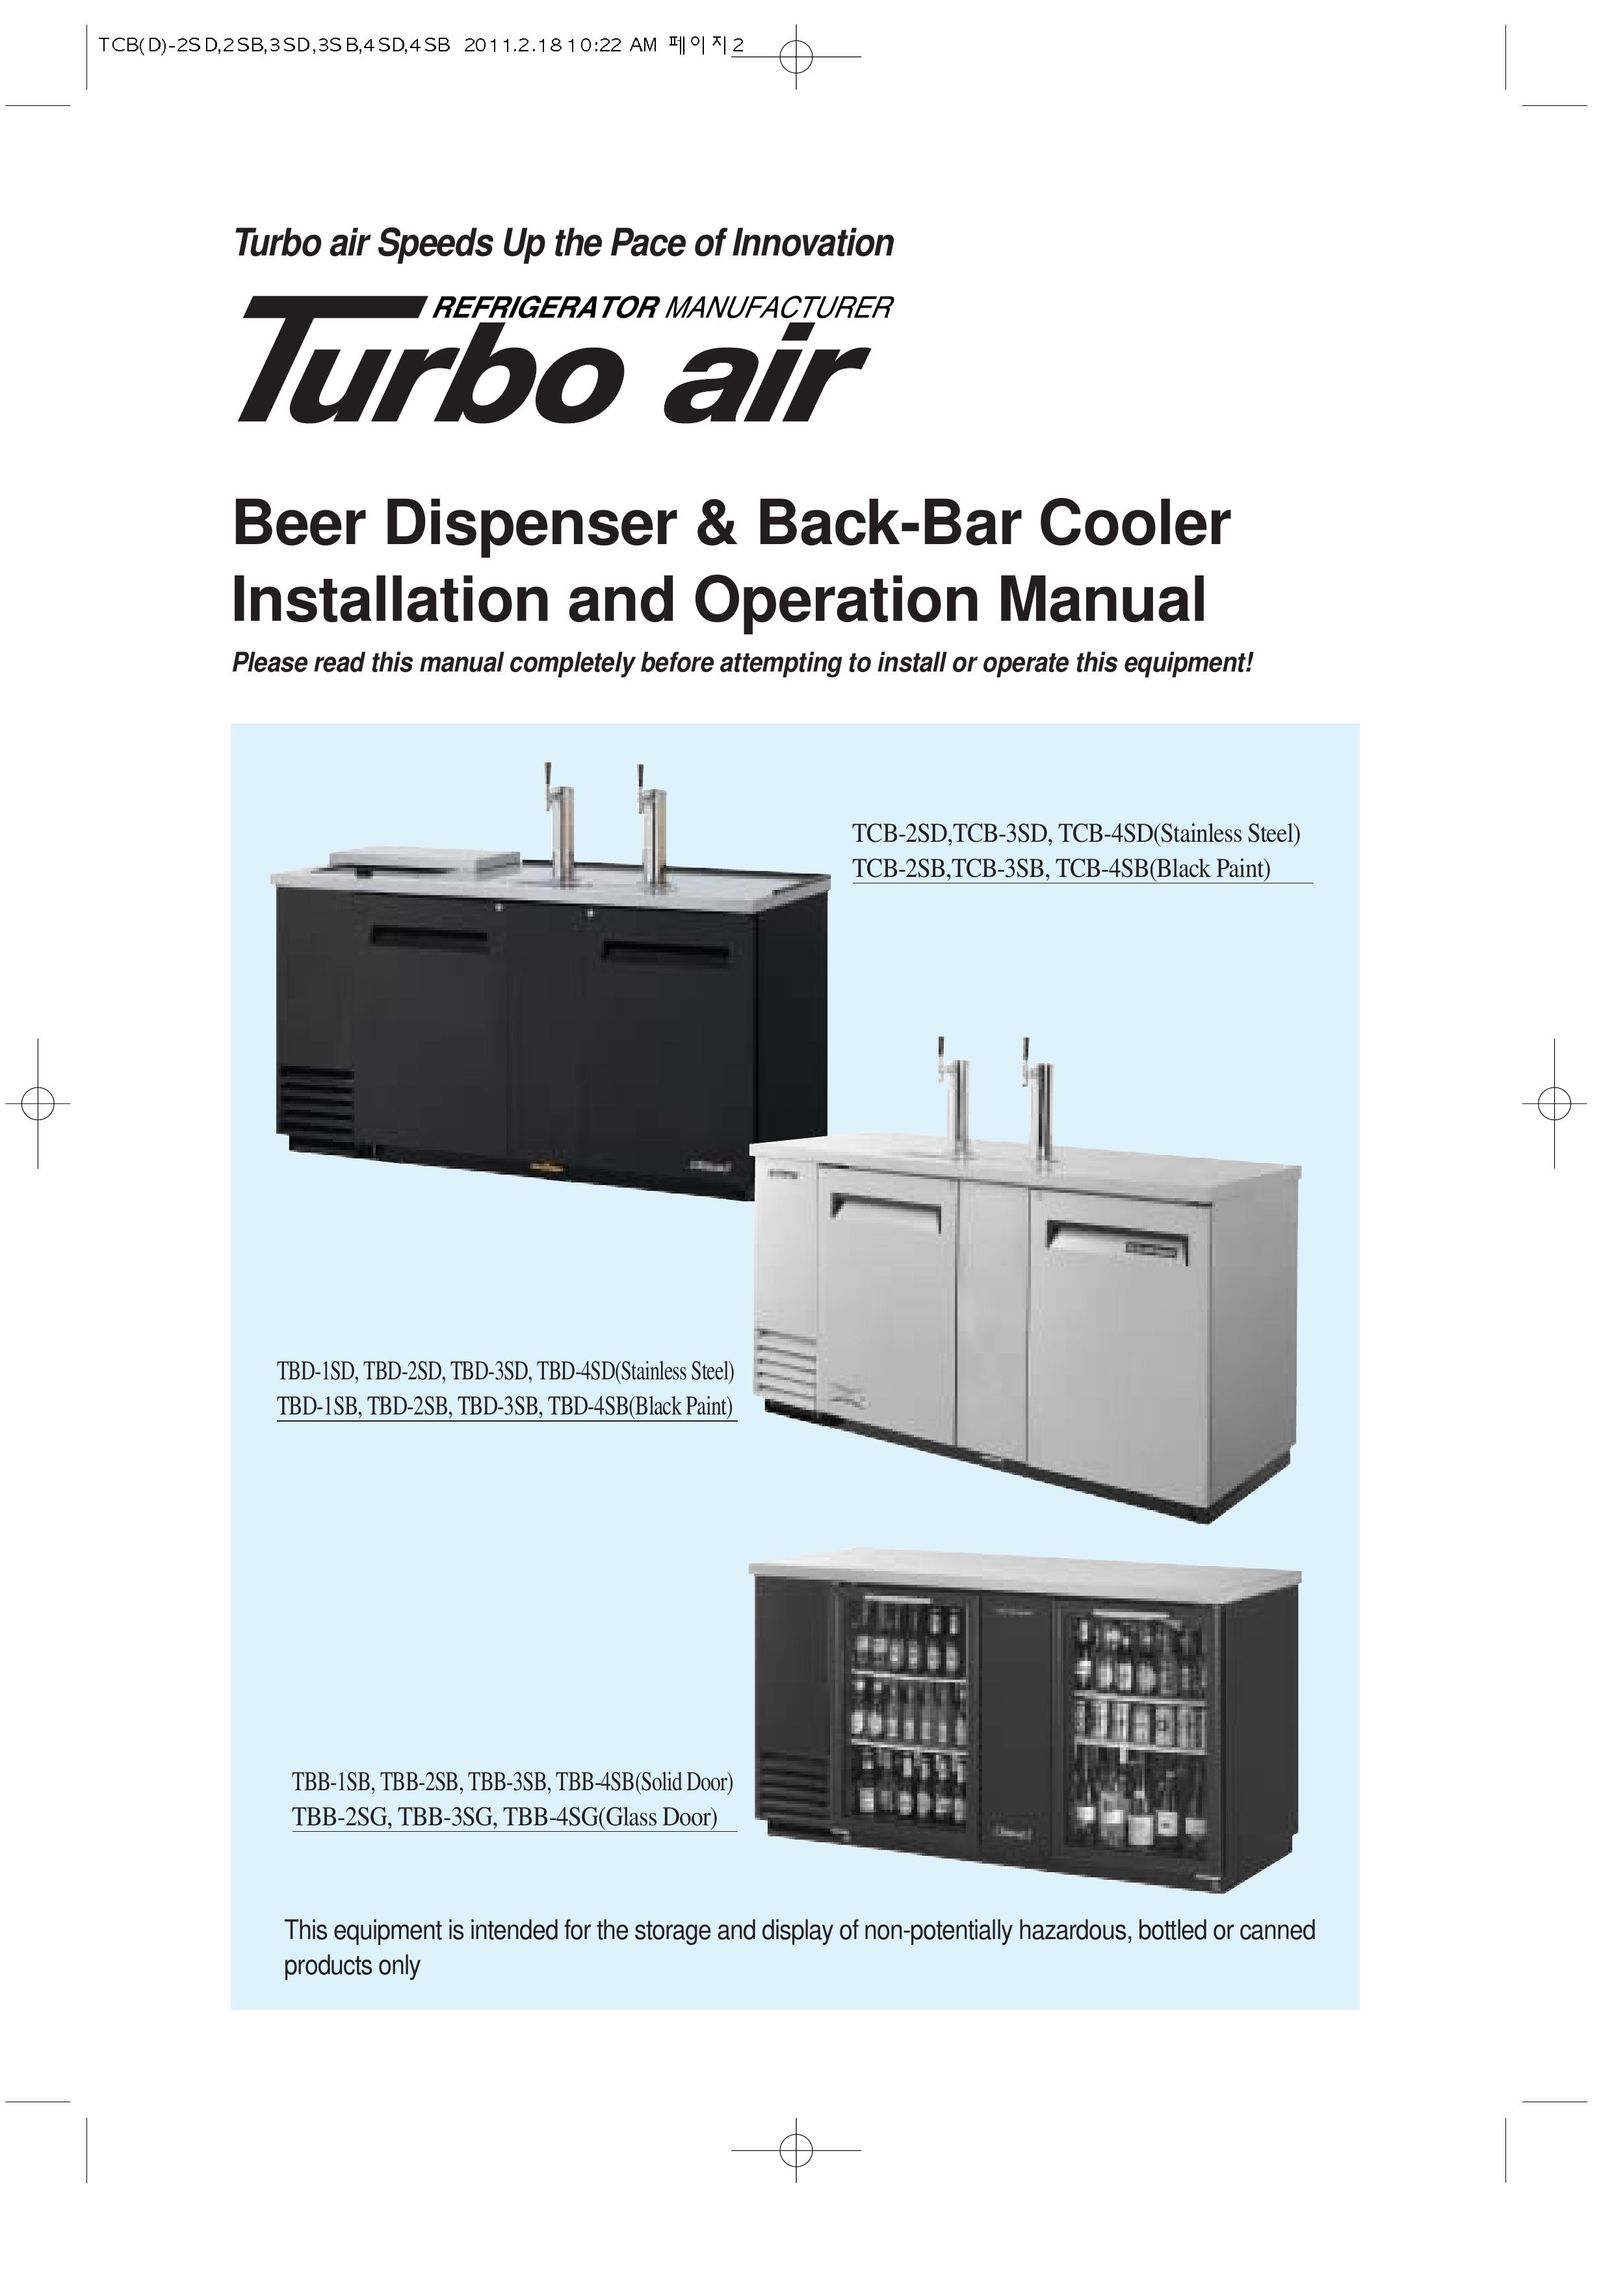 Turbo Air TBD-3SB Beverage Dispenser User Manual